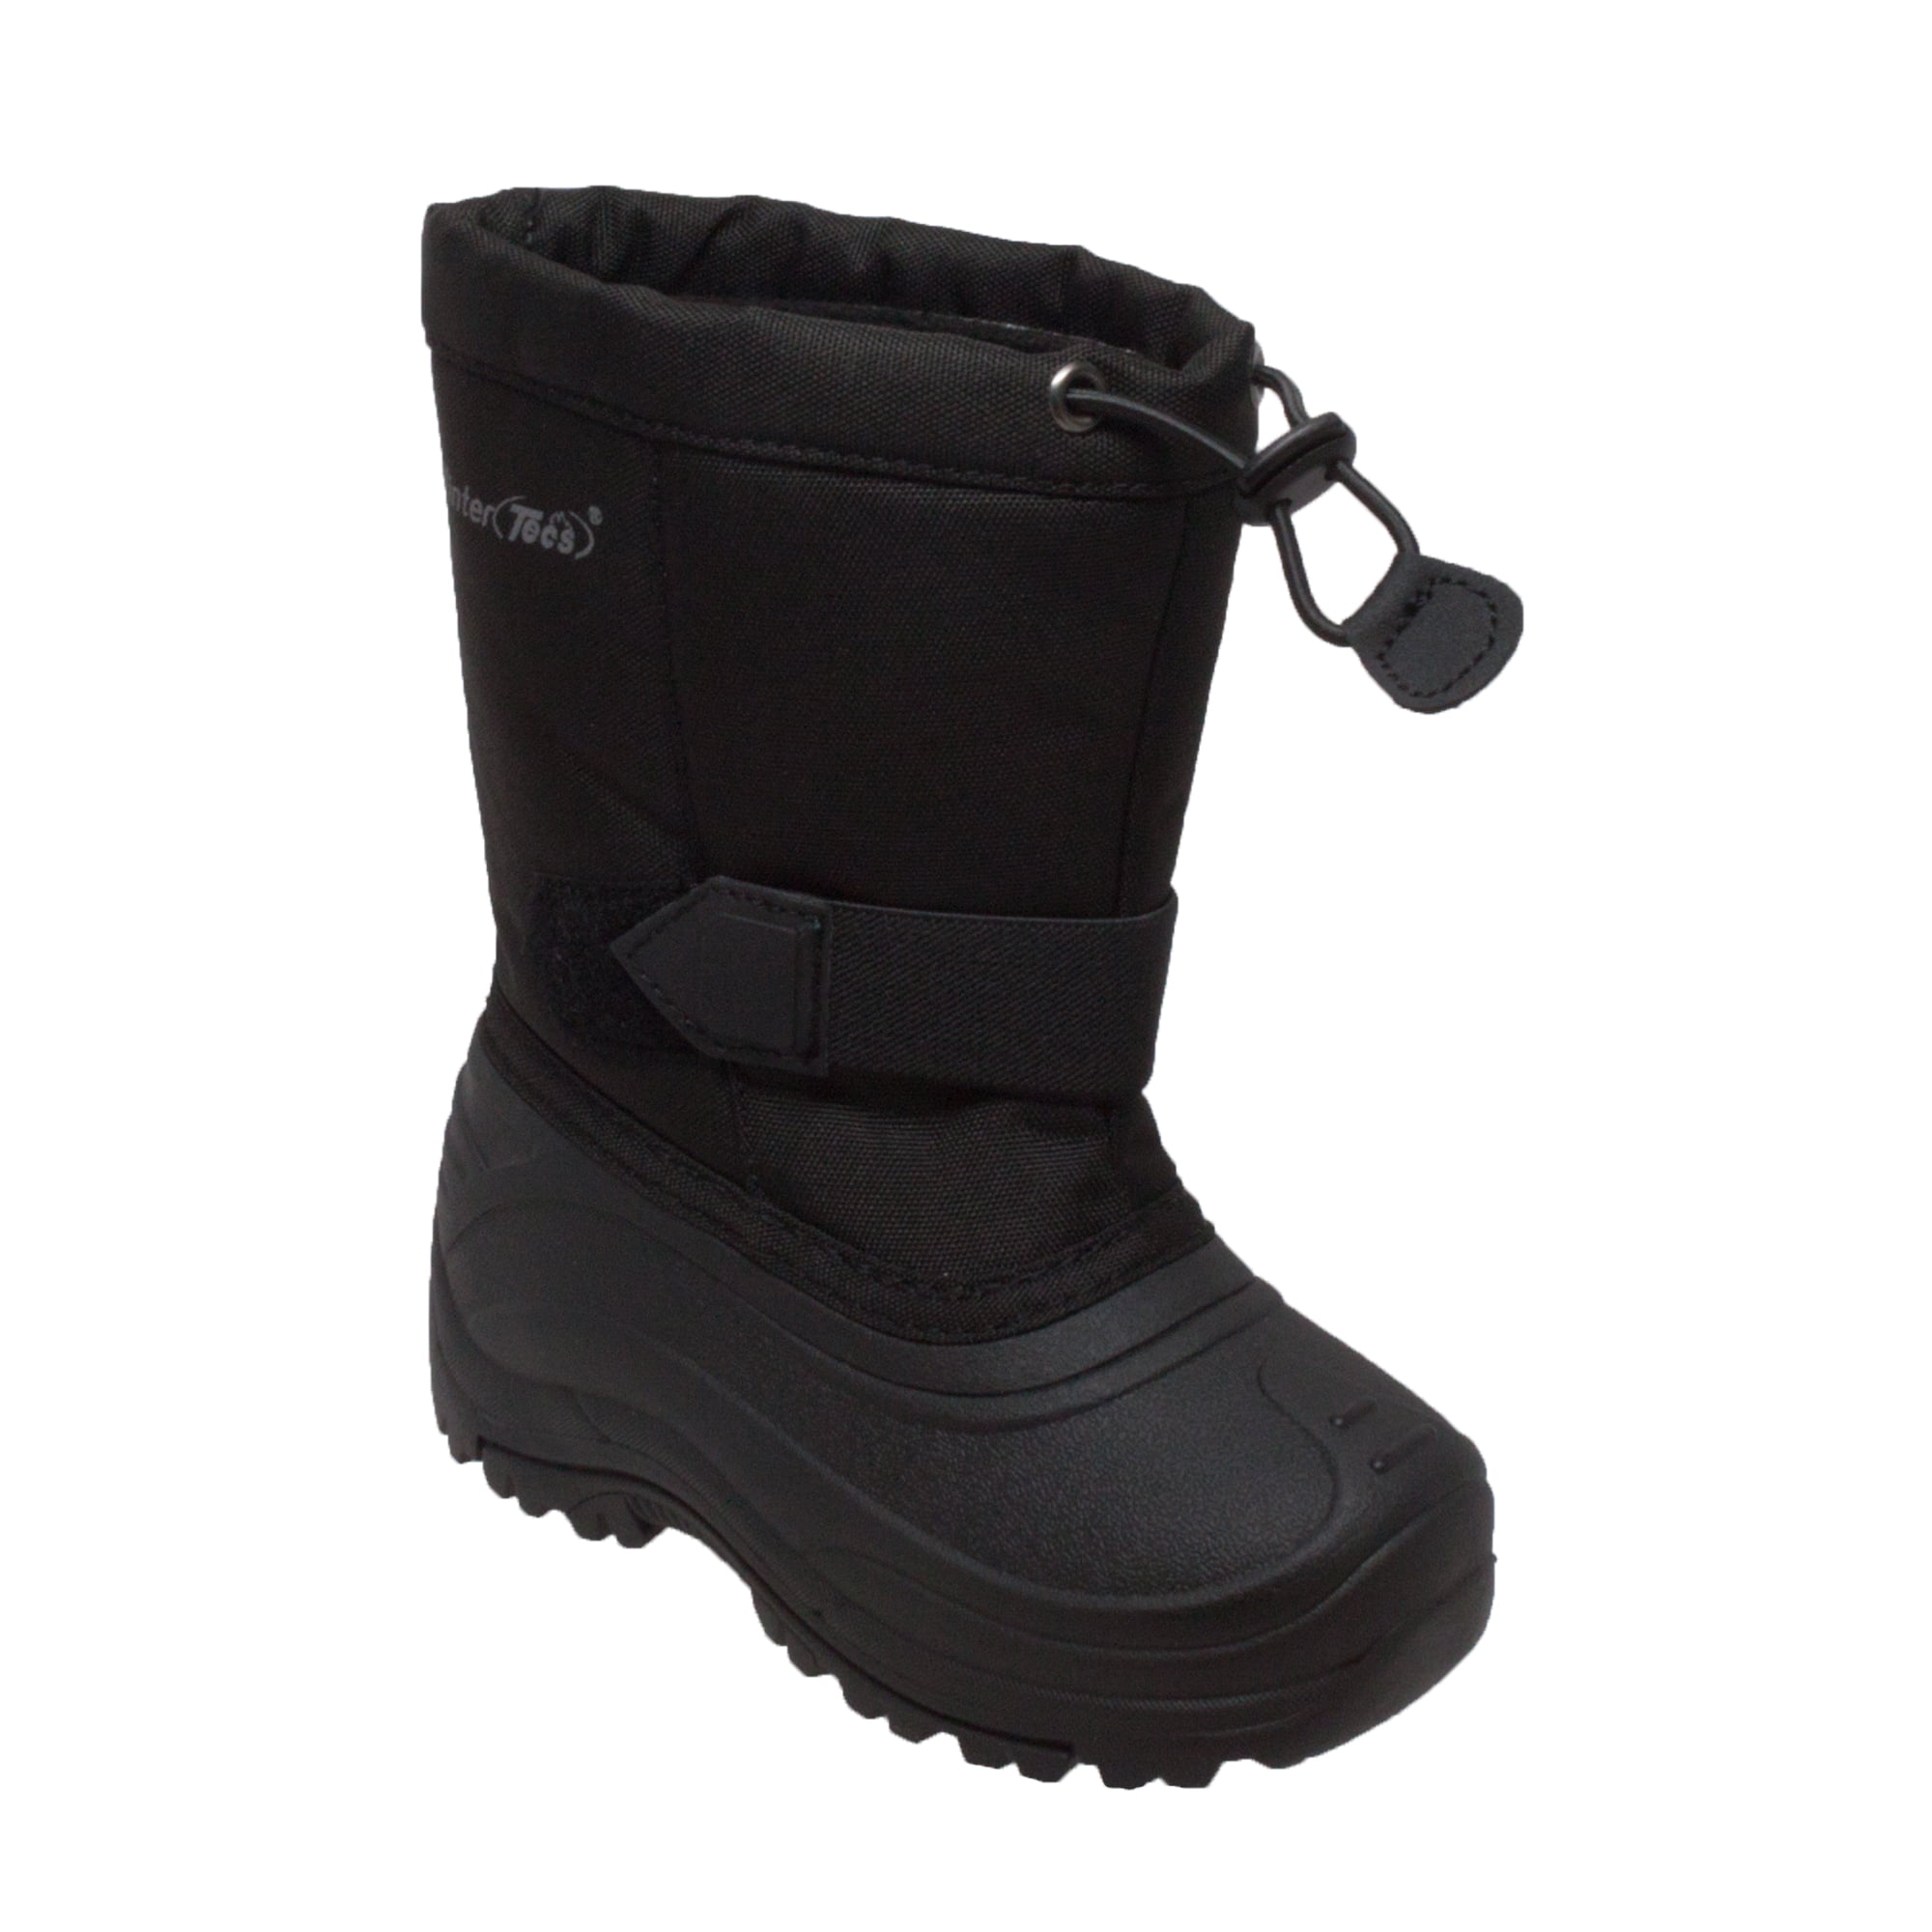 Children's Nylon Winter Boots Black - Walmart.com